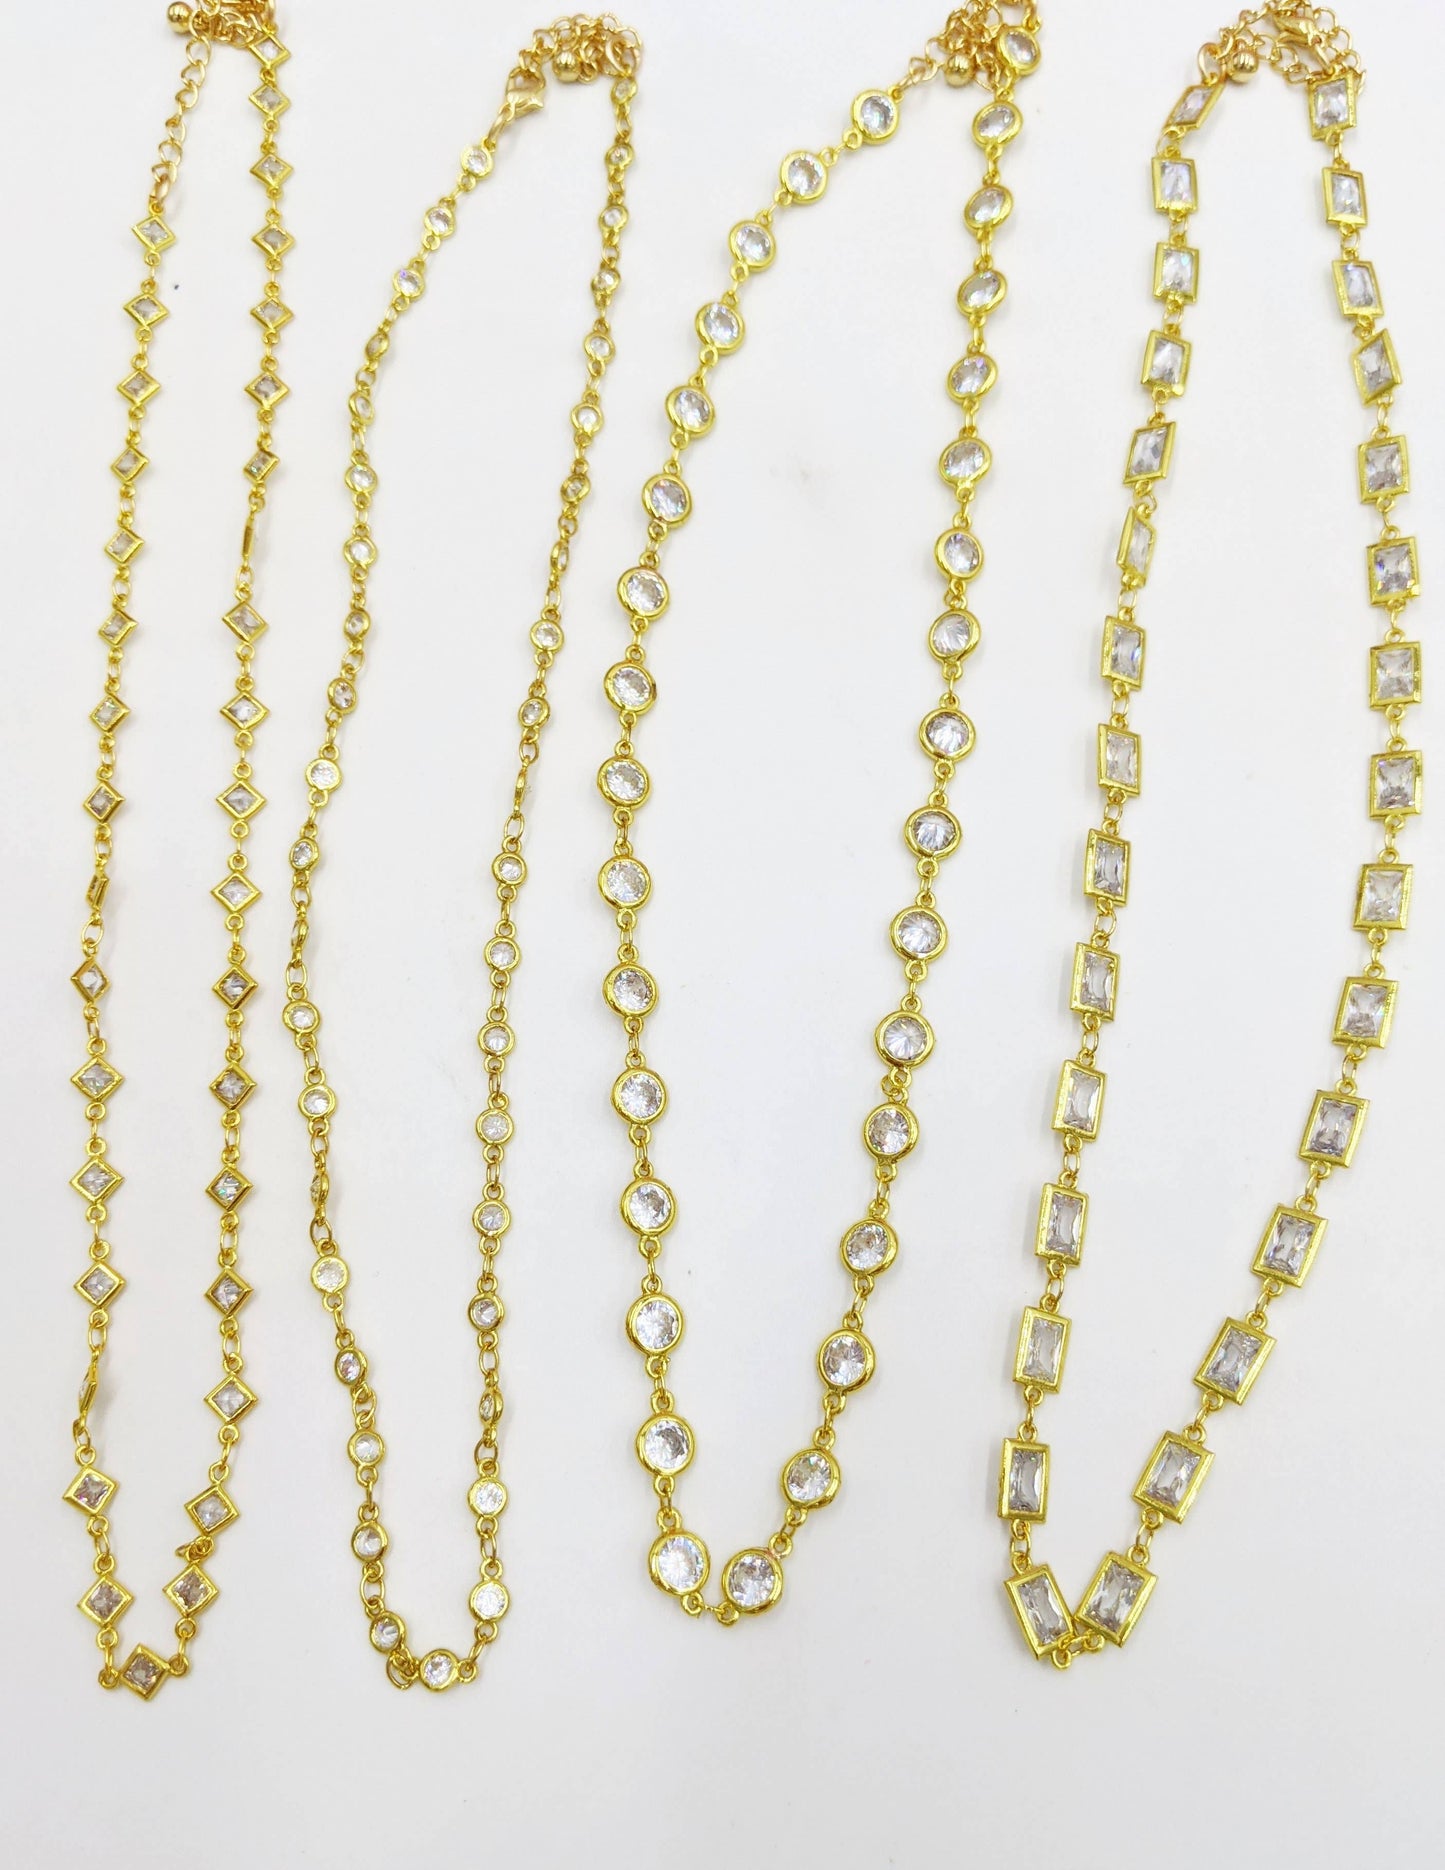 Taylor Shaye Designs Dainty Choker Layering Necklace: Small Diamond